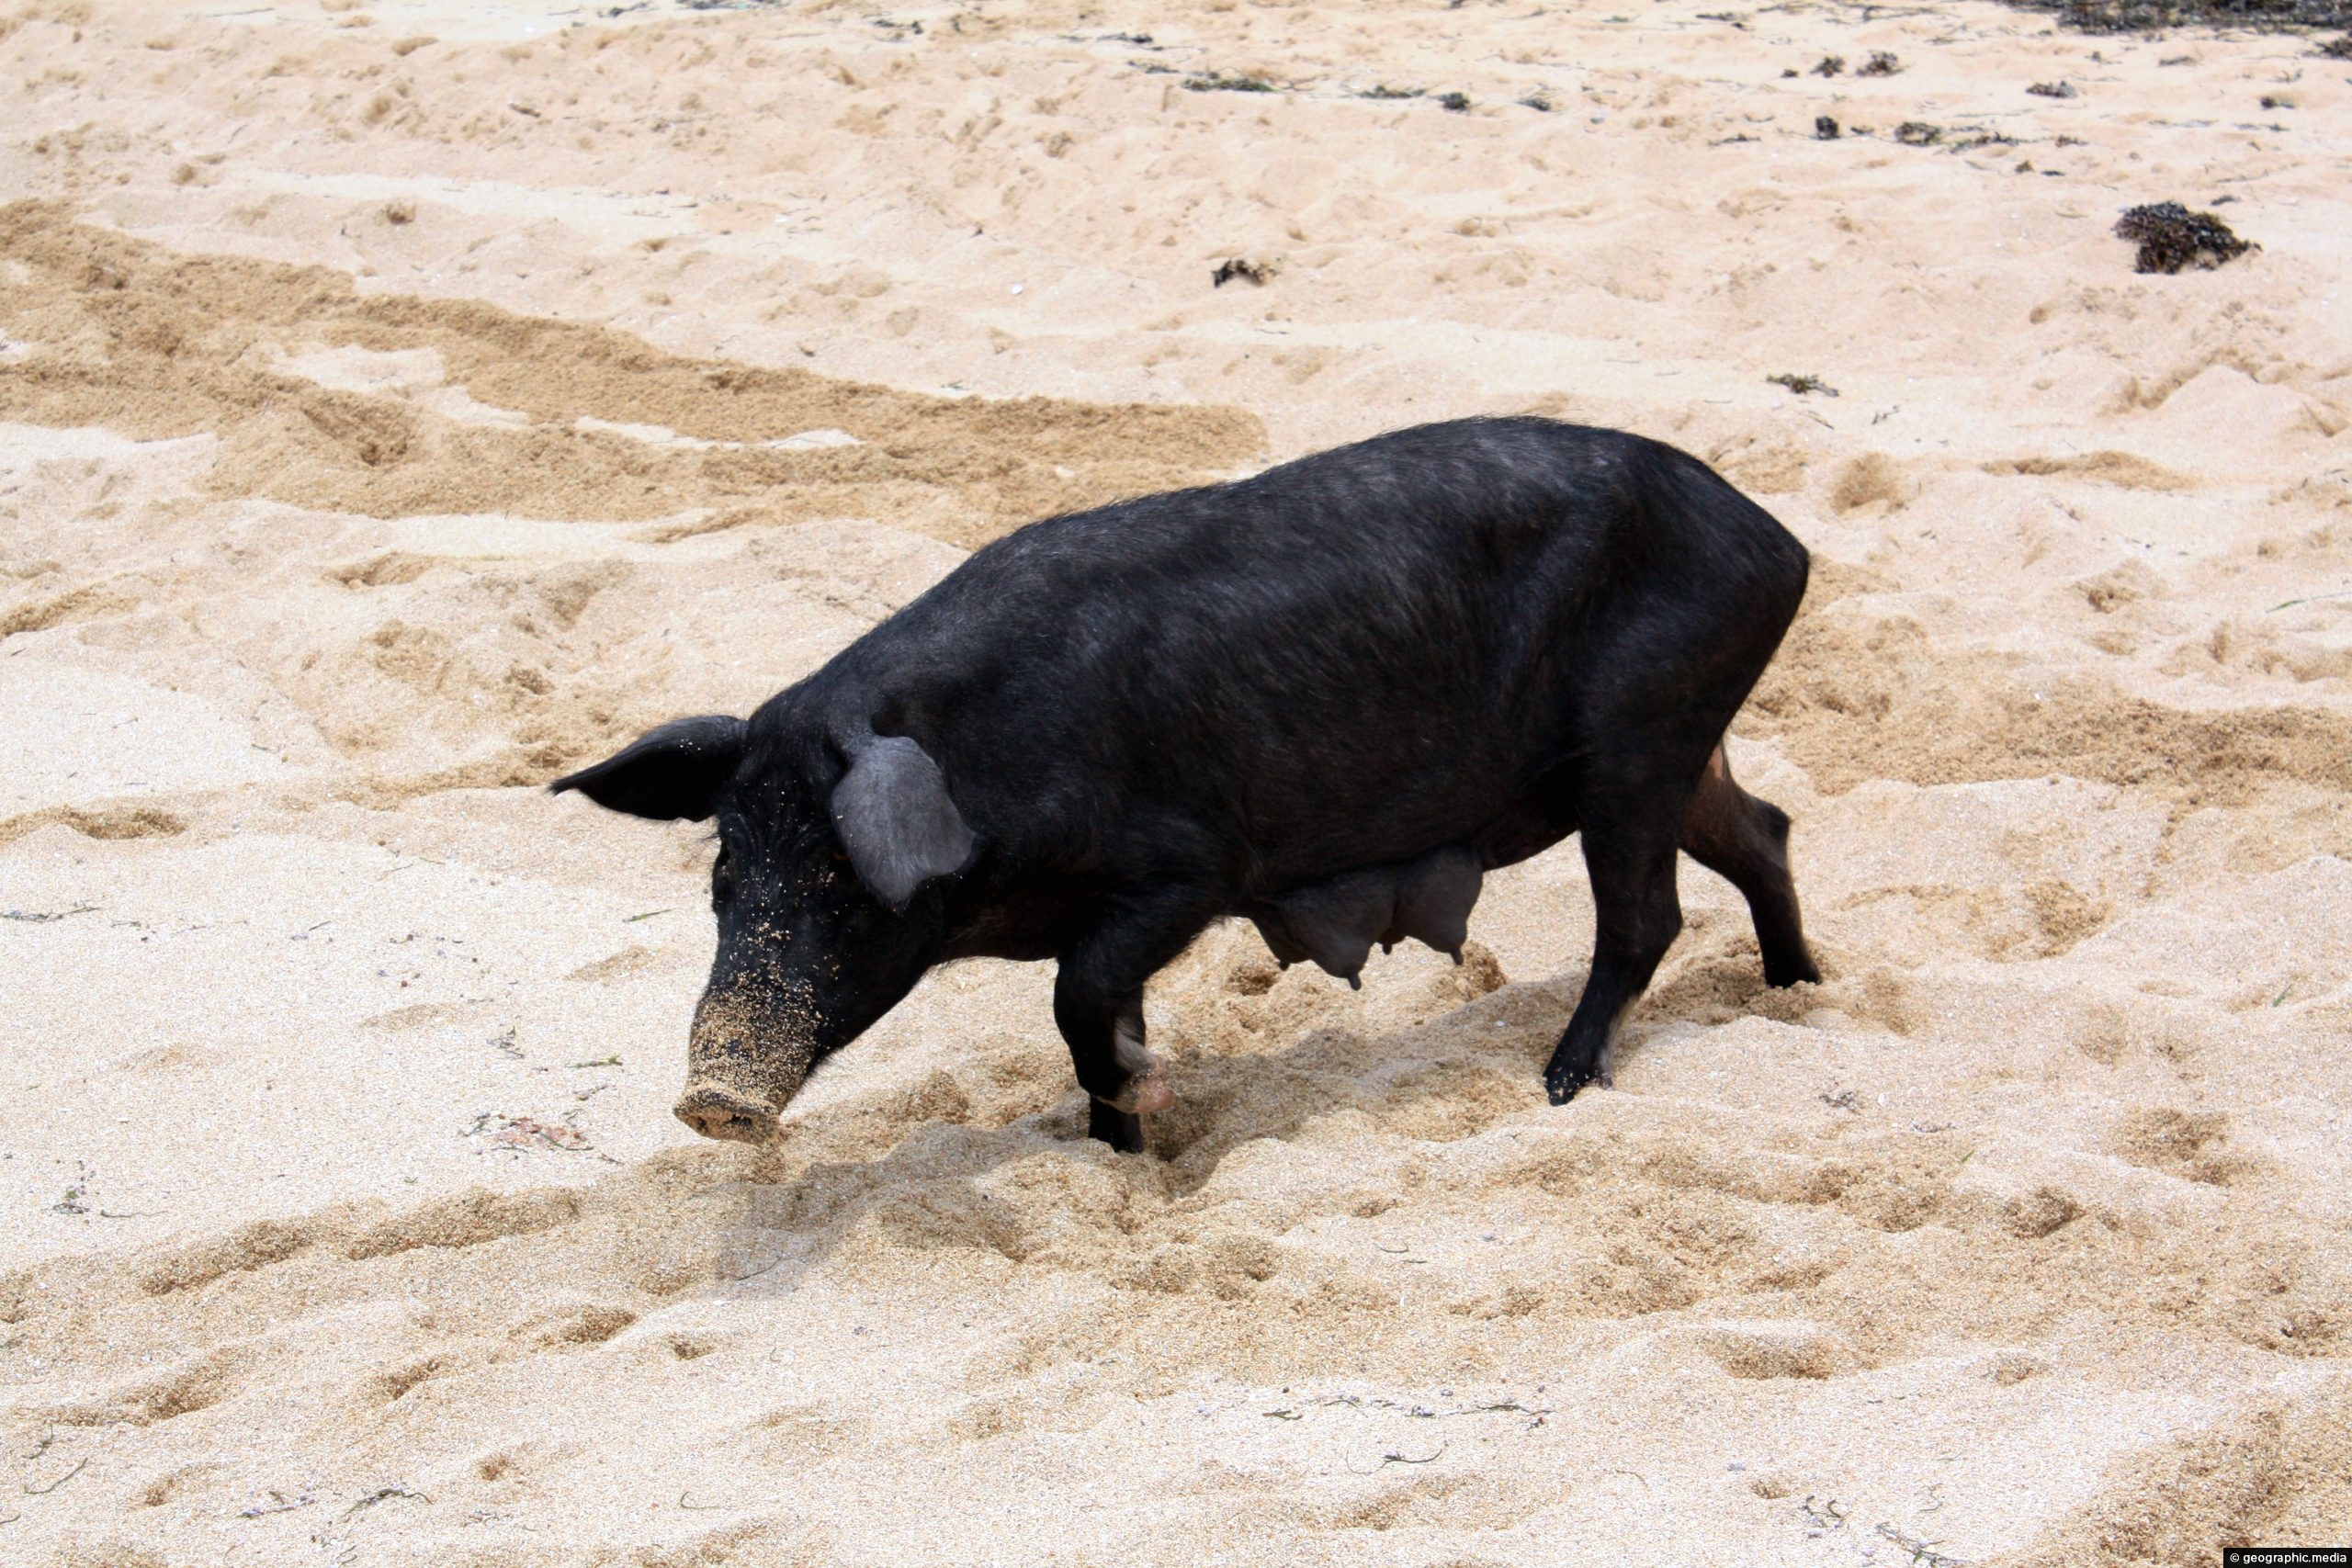 Wild pig on Atata Island